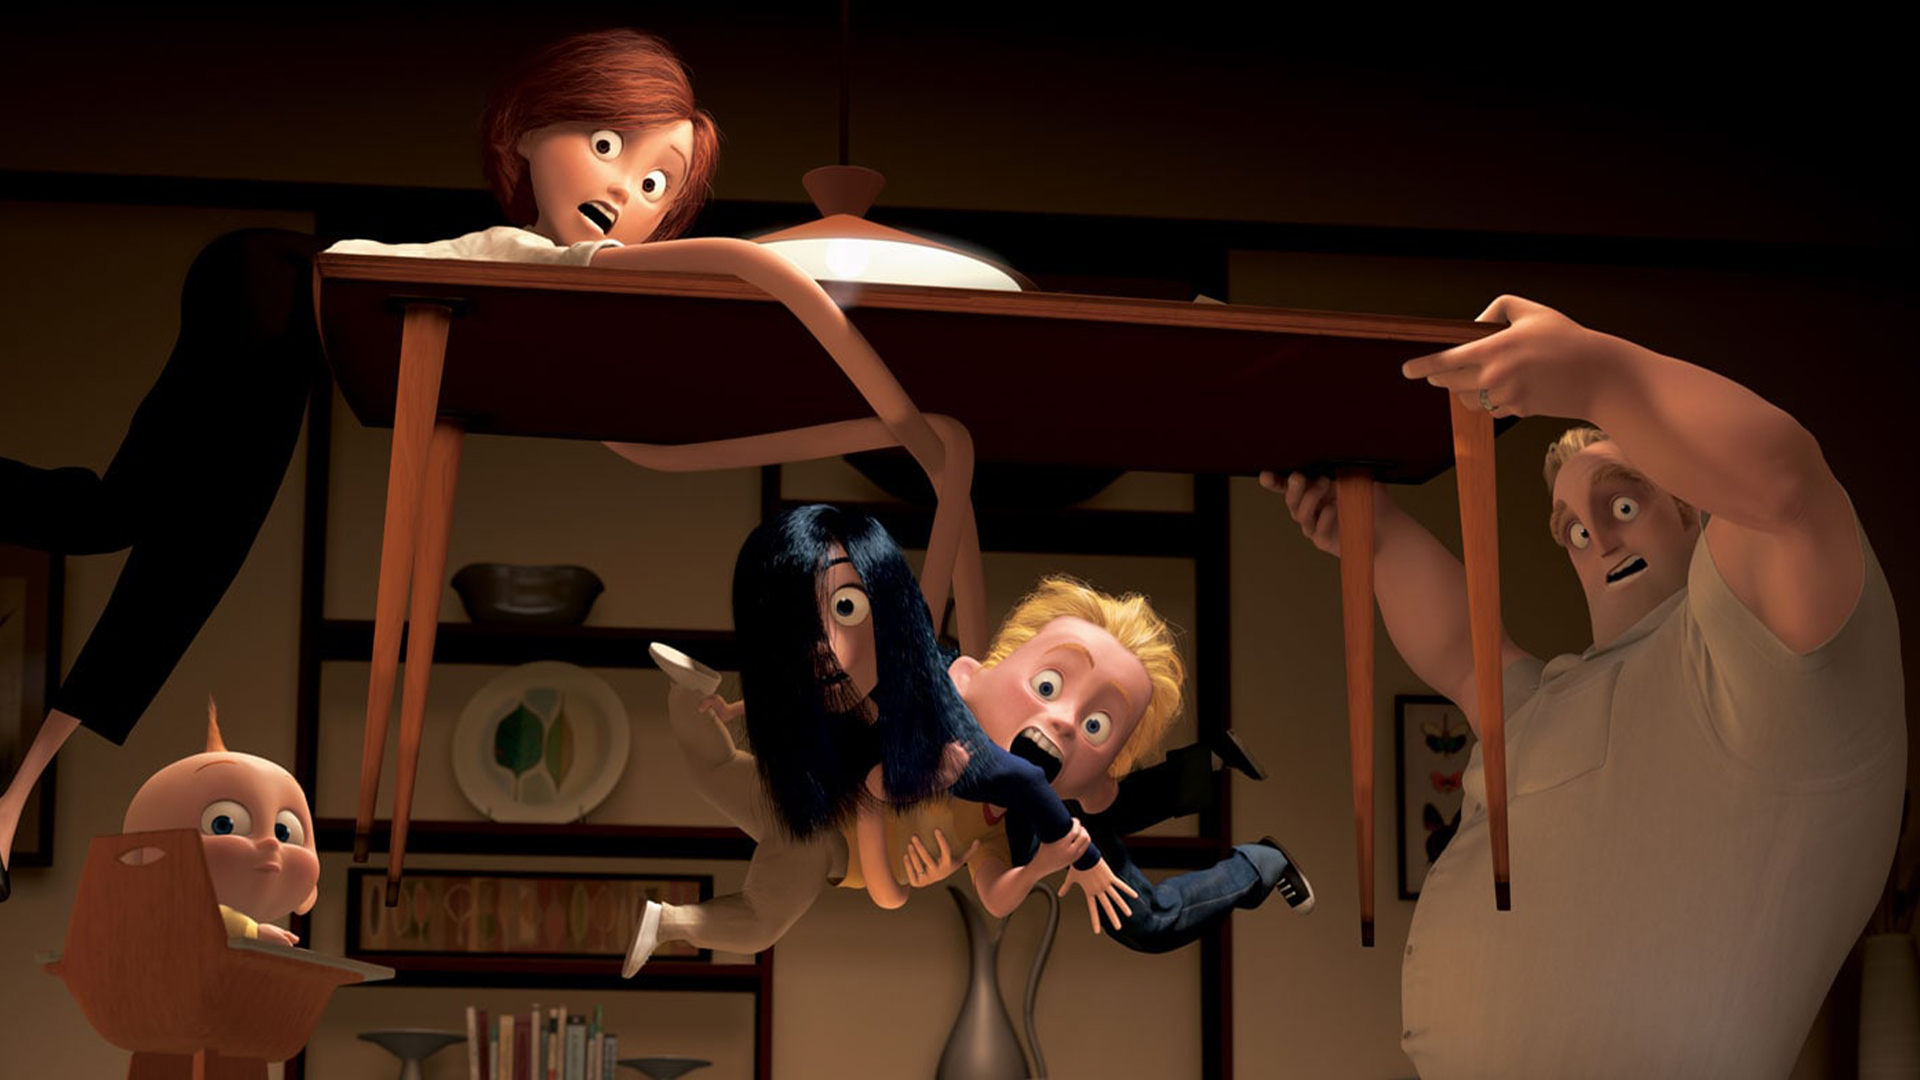 The Incredibles | Disney Pixar | Brad Bird | John Walker 